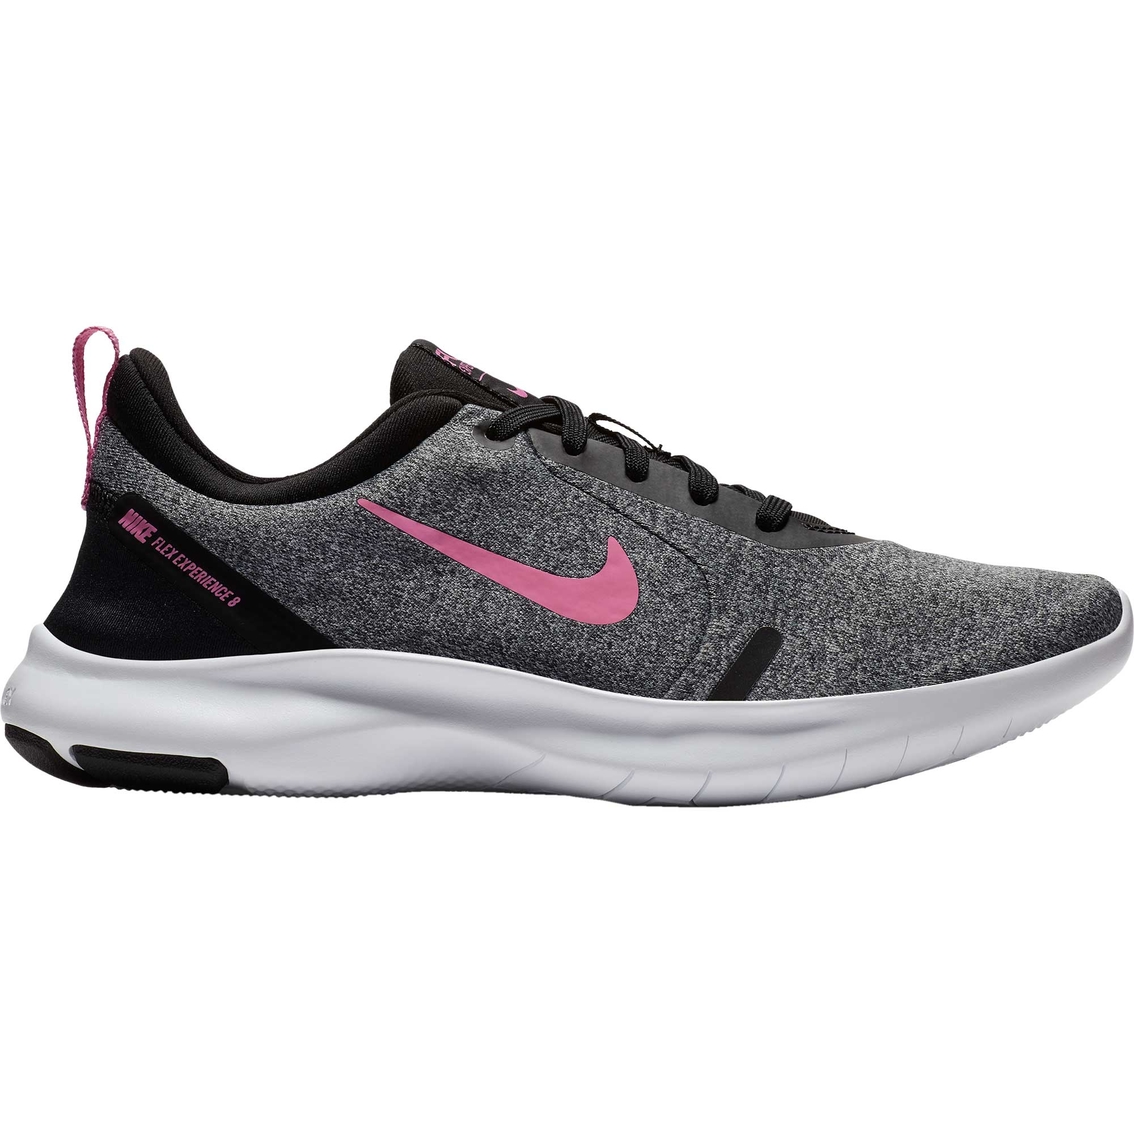 Nike Women's Flex Experience Rn 8 Running Shoes | Running | Shoes ...